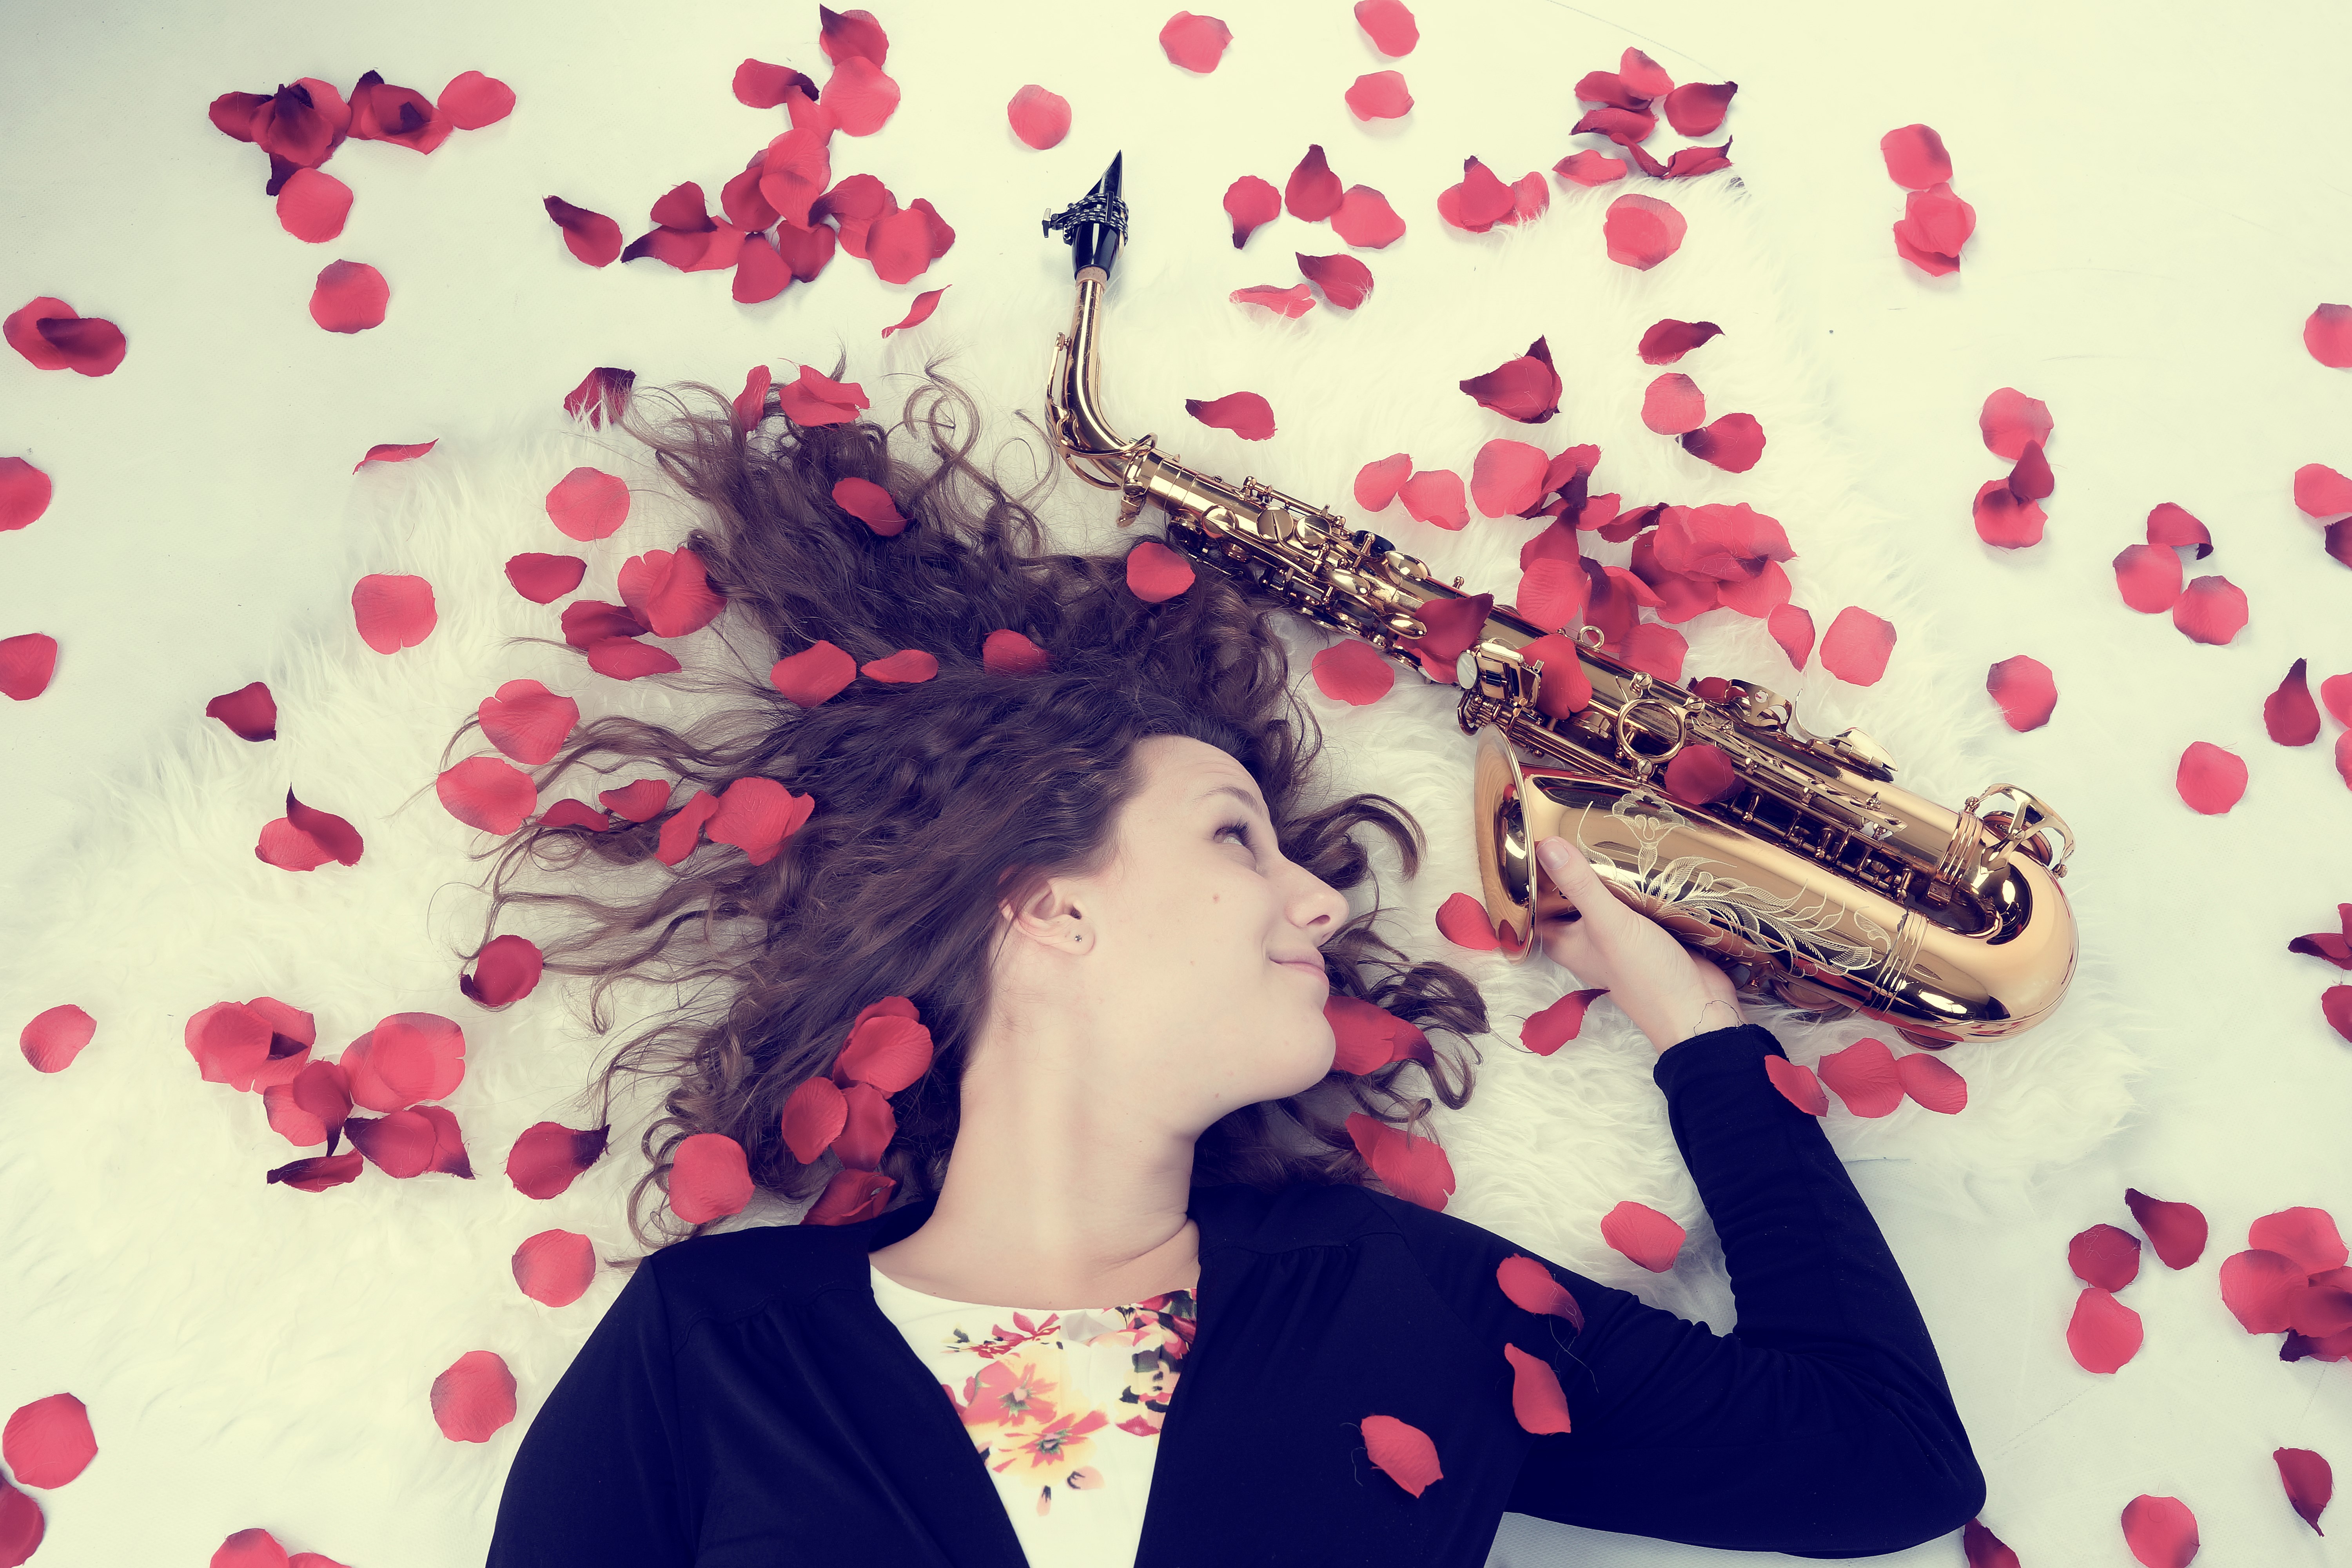 Saxofoniste Els van der Weij